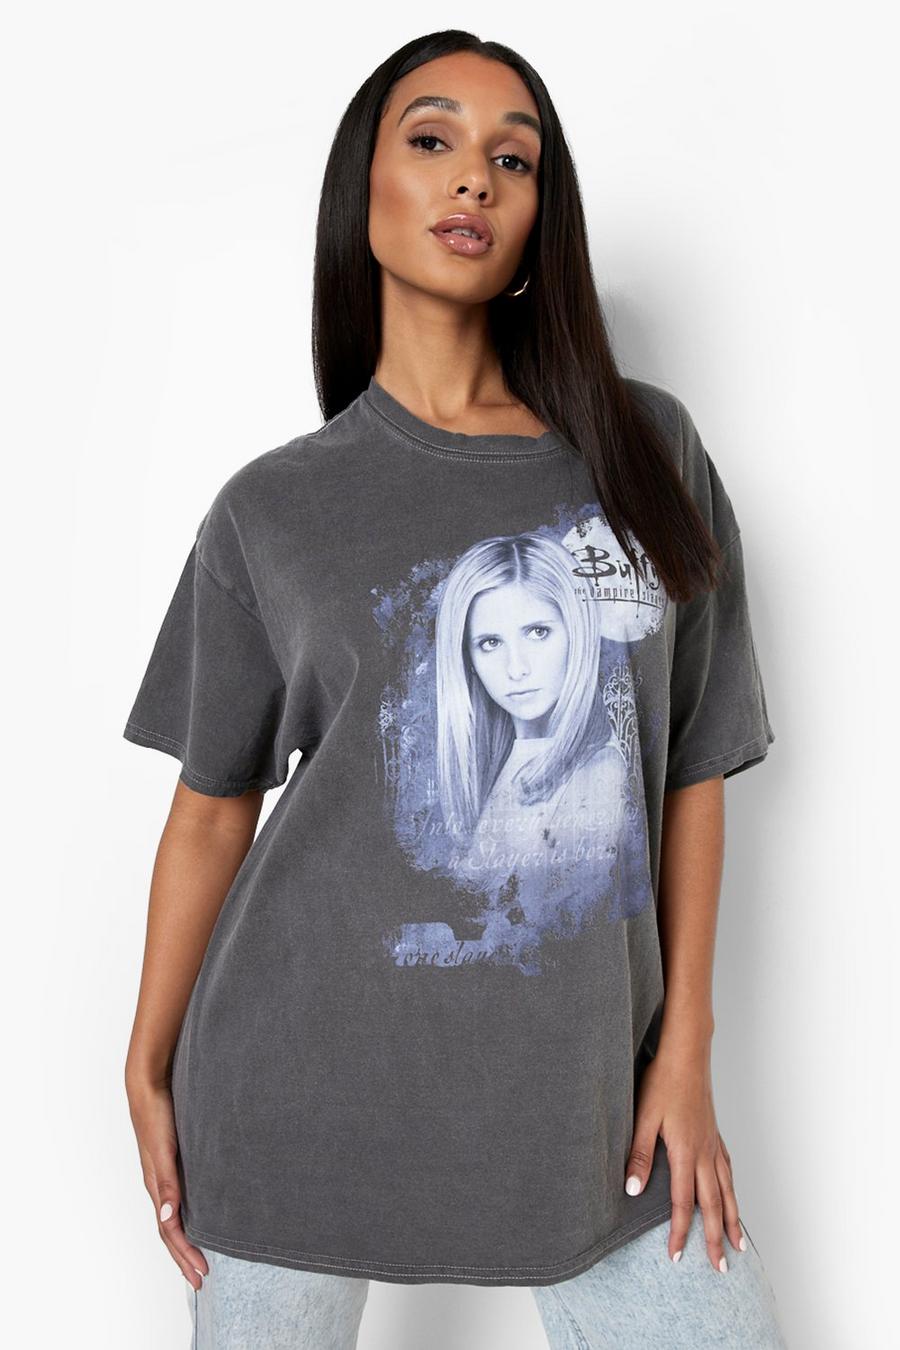 T-shirt di Halloween ufficiale di Buffy L’Ammazza vampiri, Charcoal image number 1